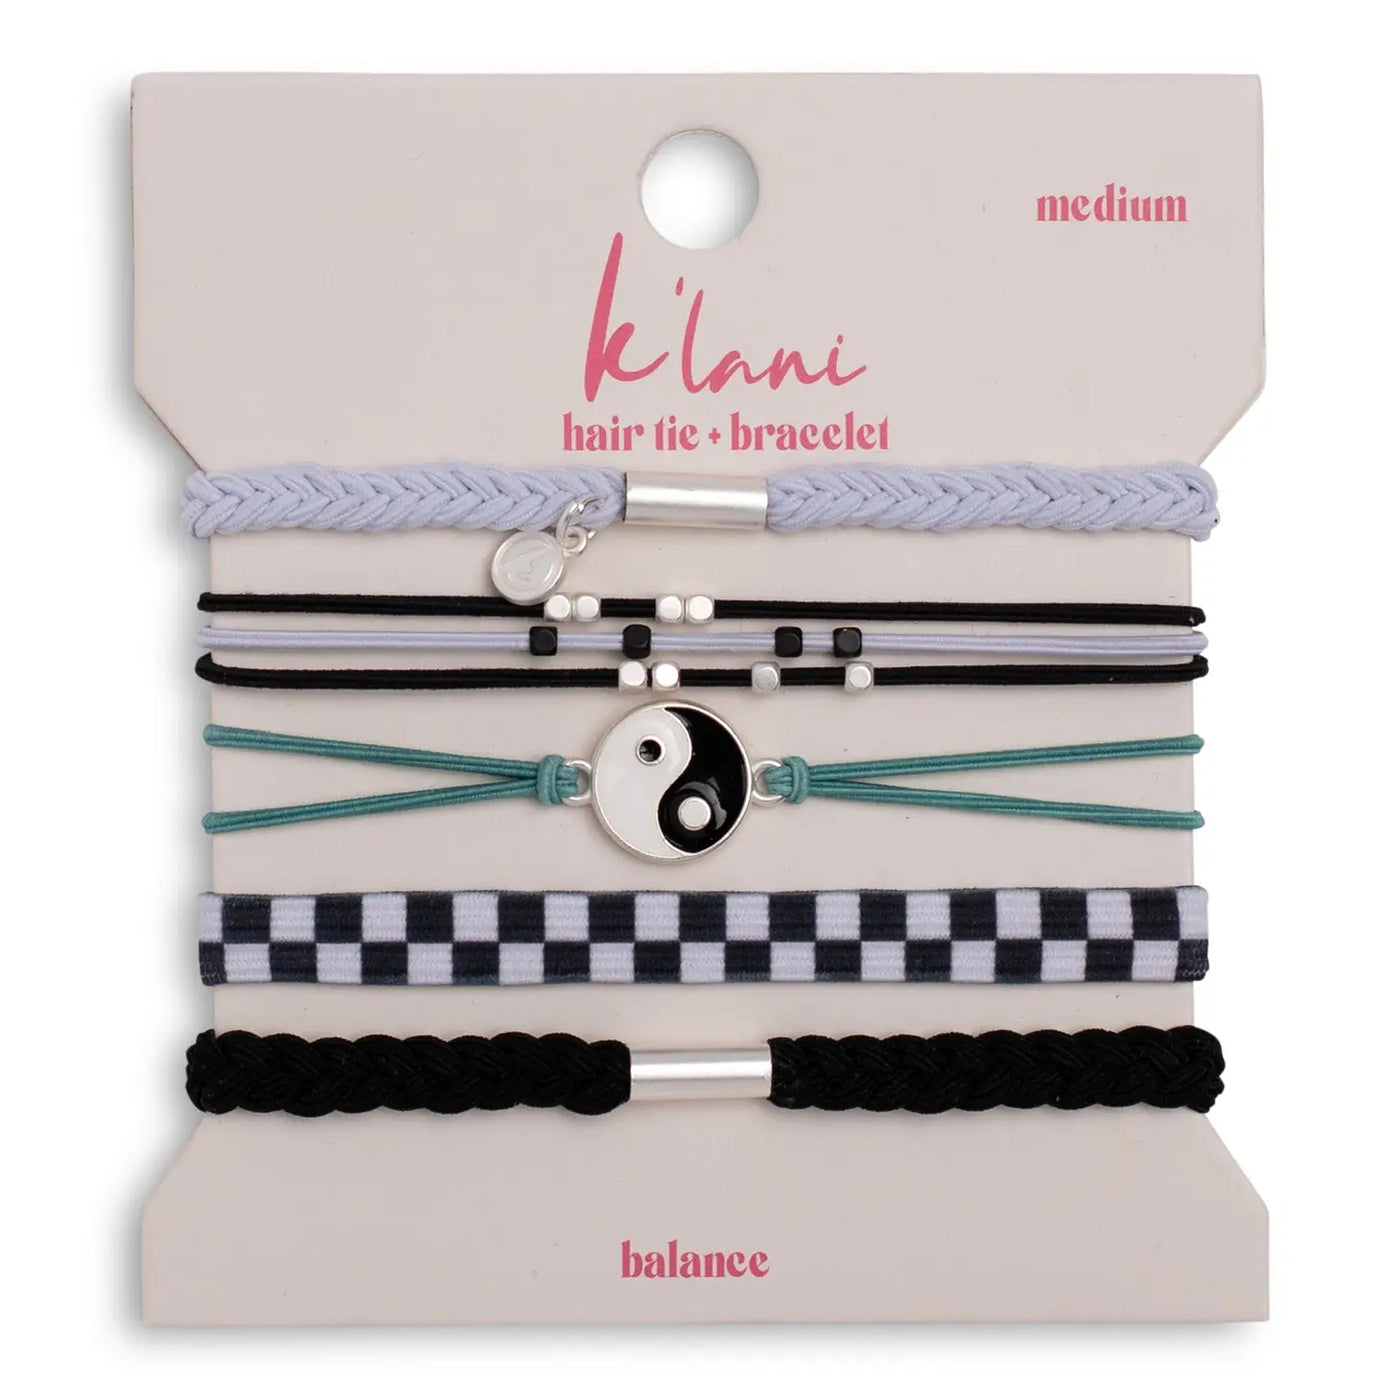 K'lani Hair Tie Bracelet- Balance